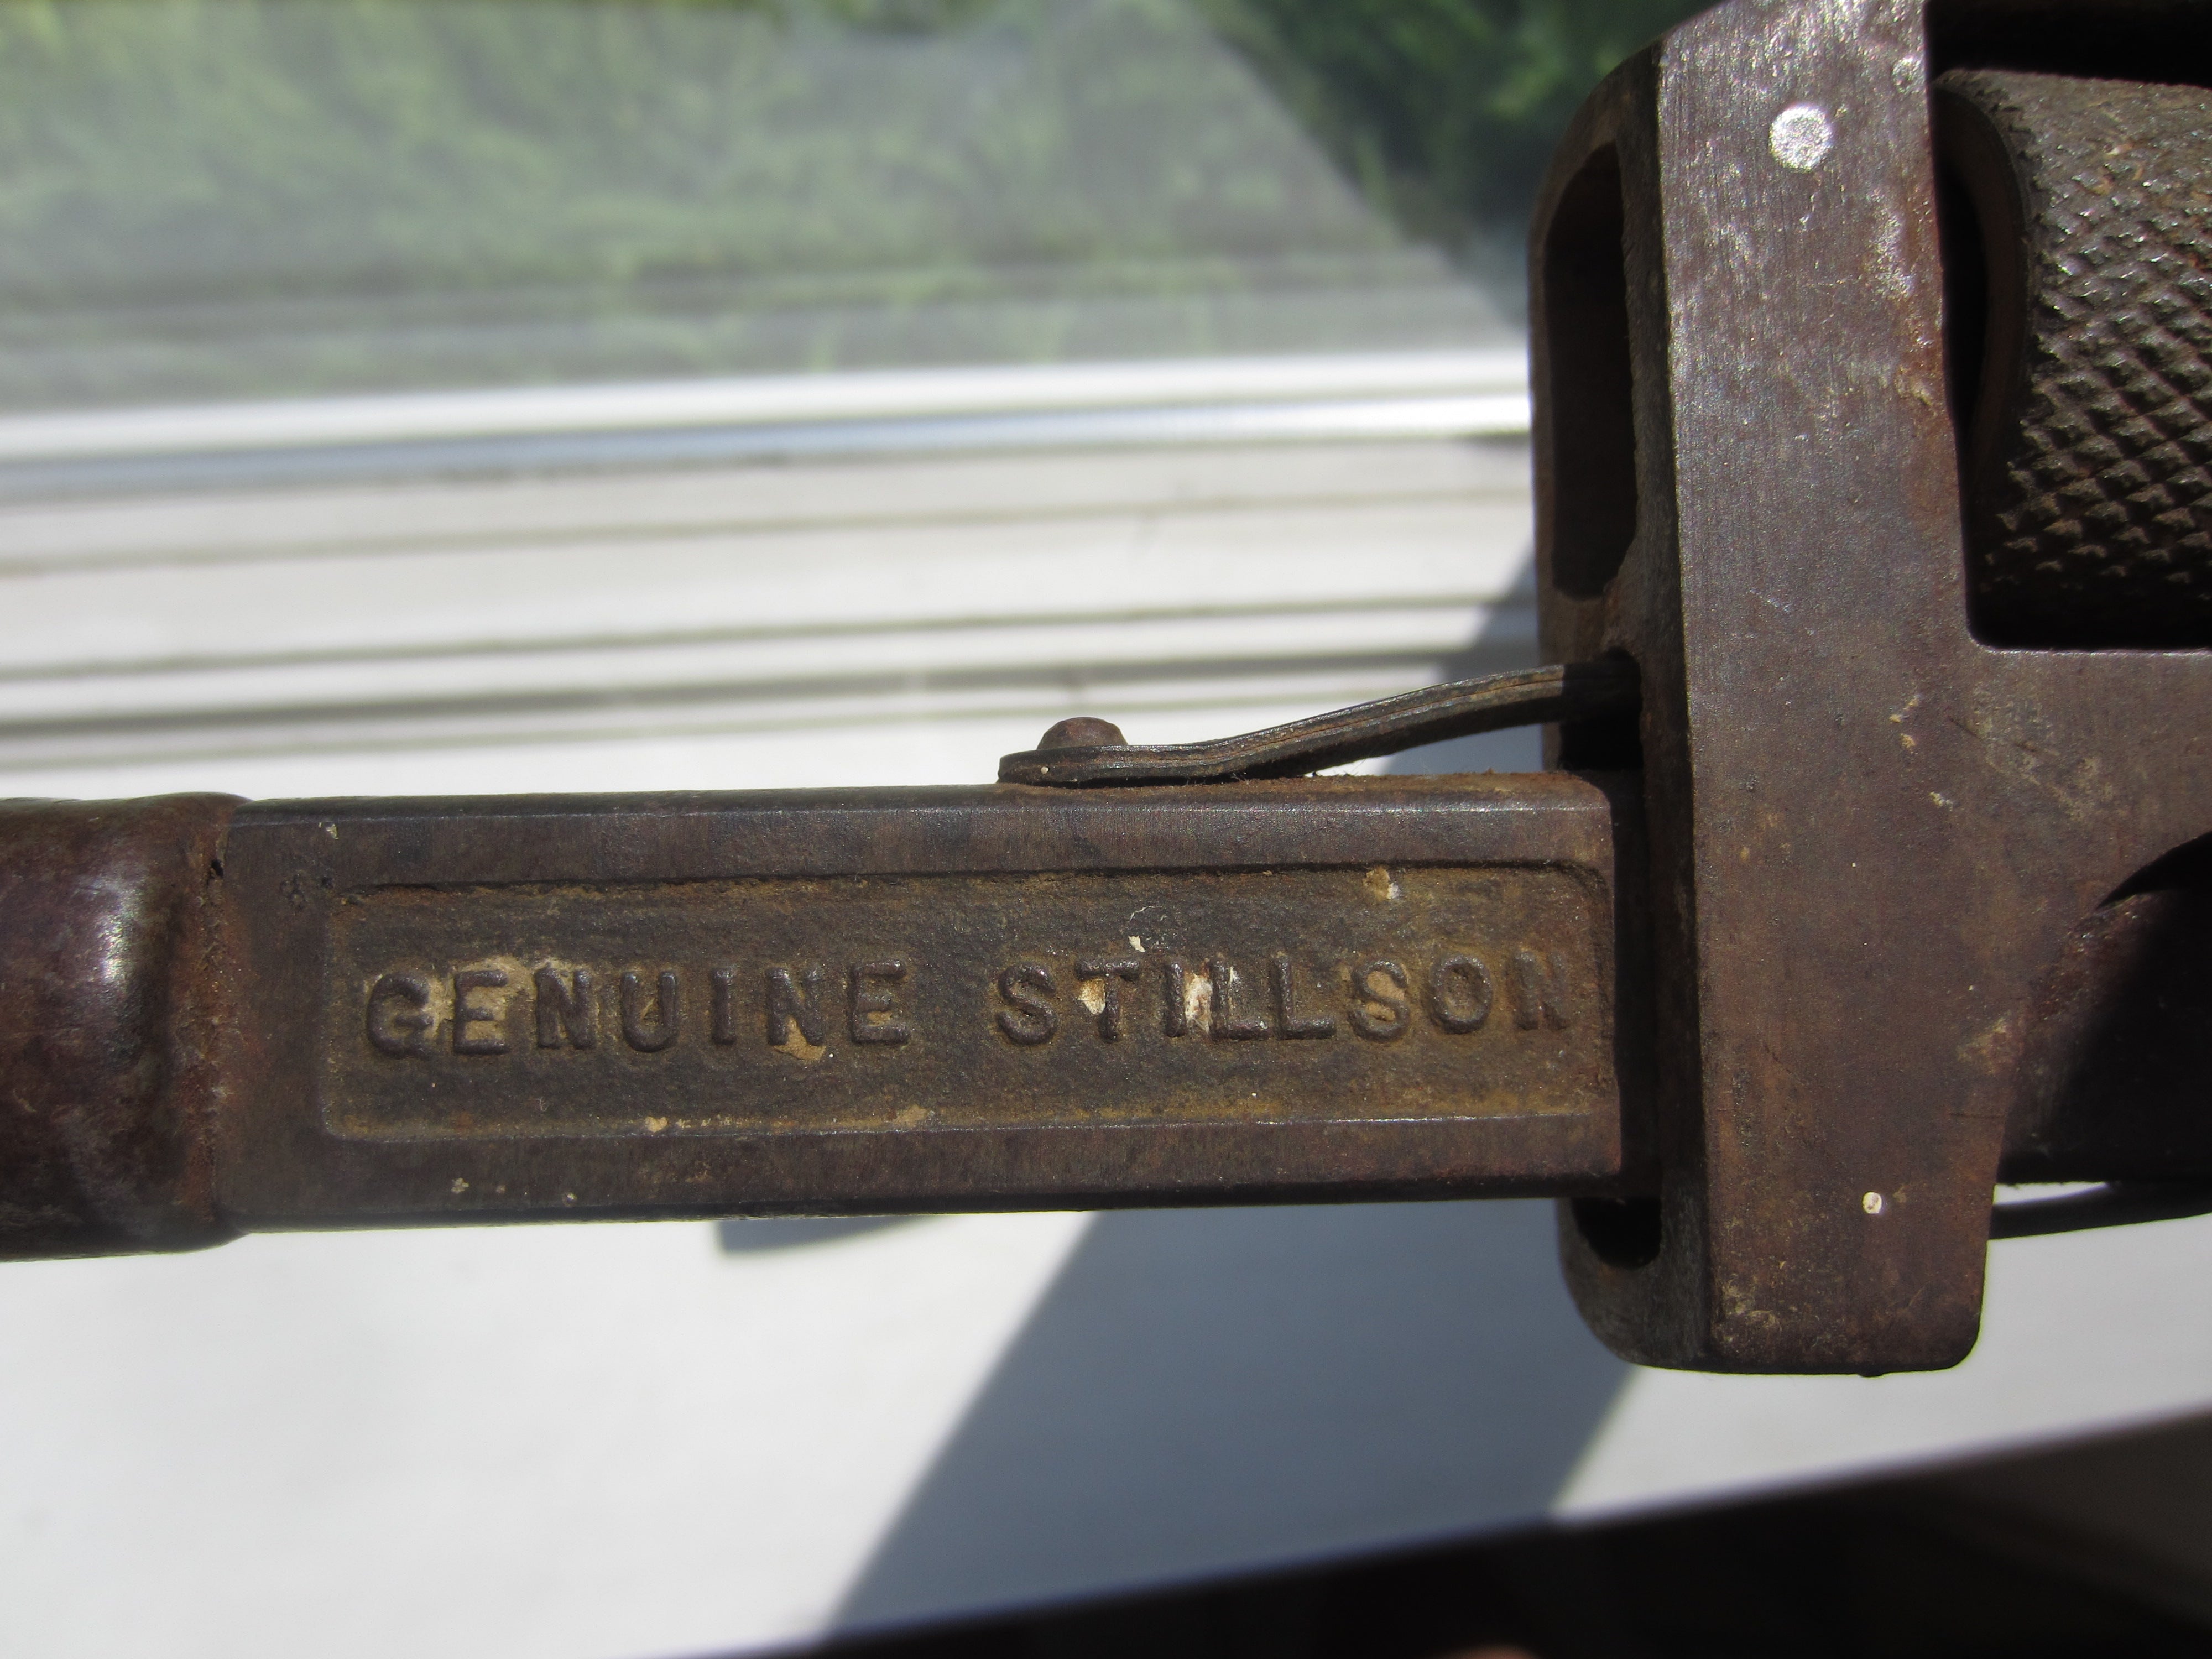 Vintage Stillson Wrench 14"